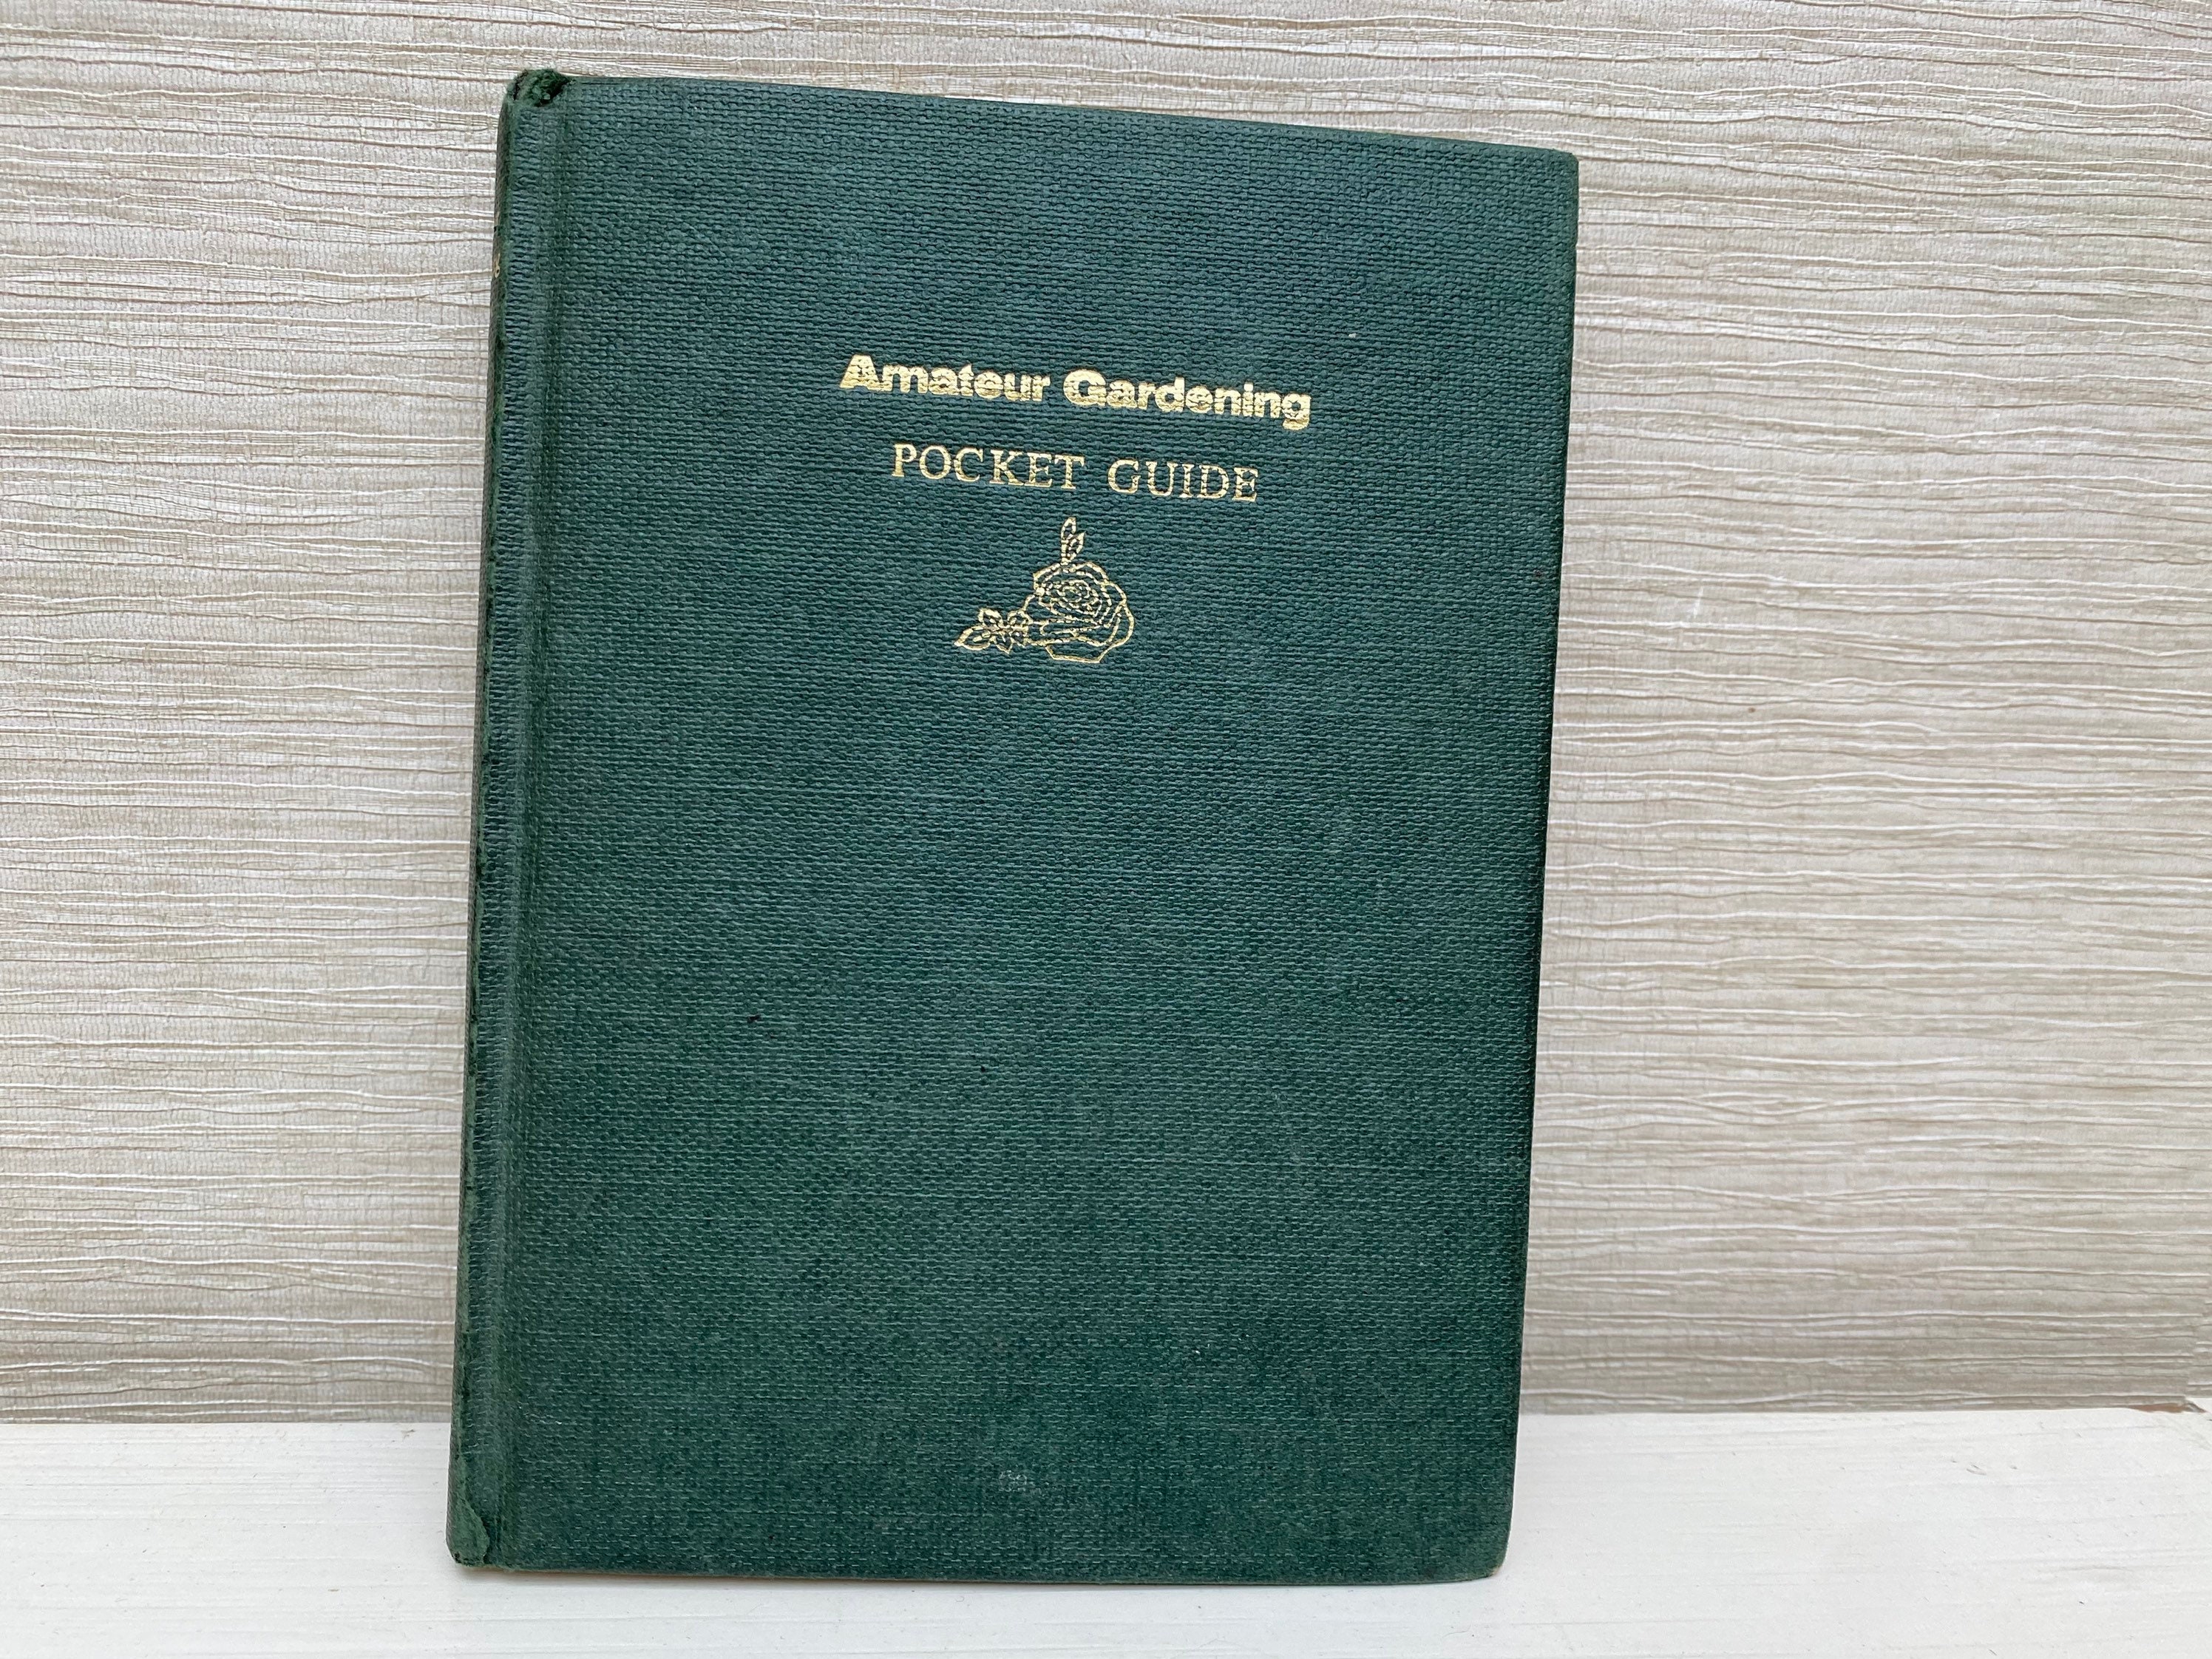 Amateur Gardening Pocket Guide 1967 Hardback Book by A